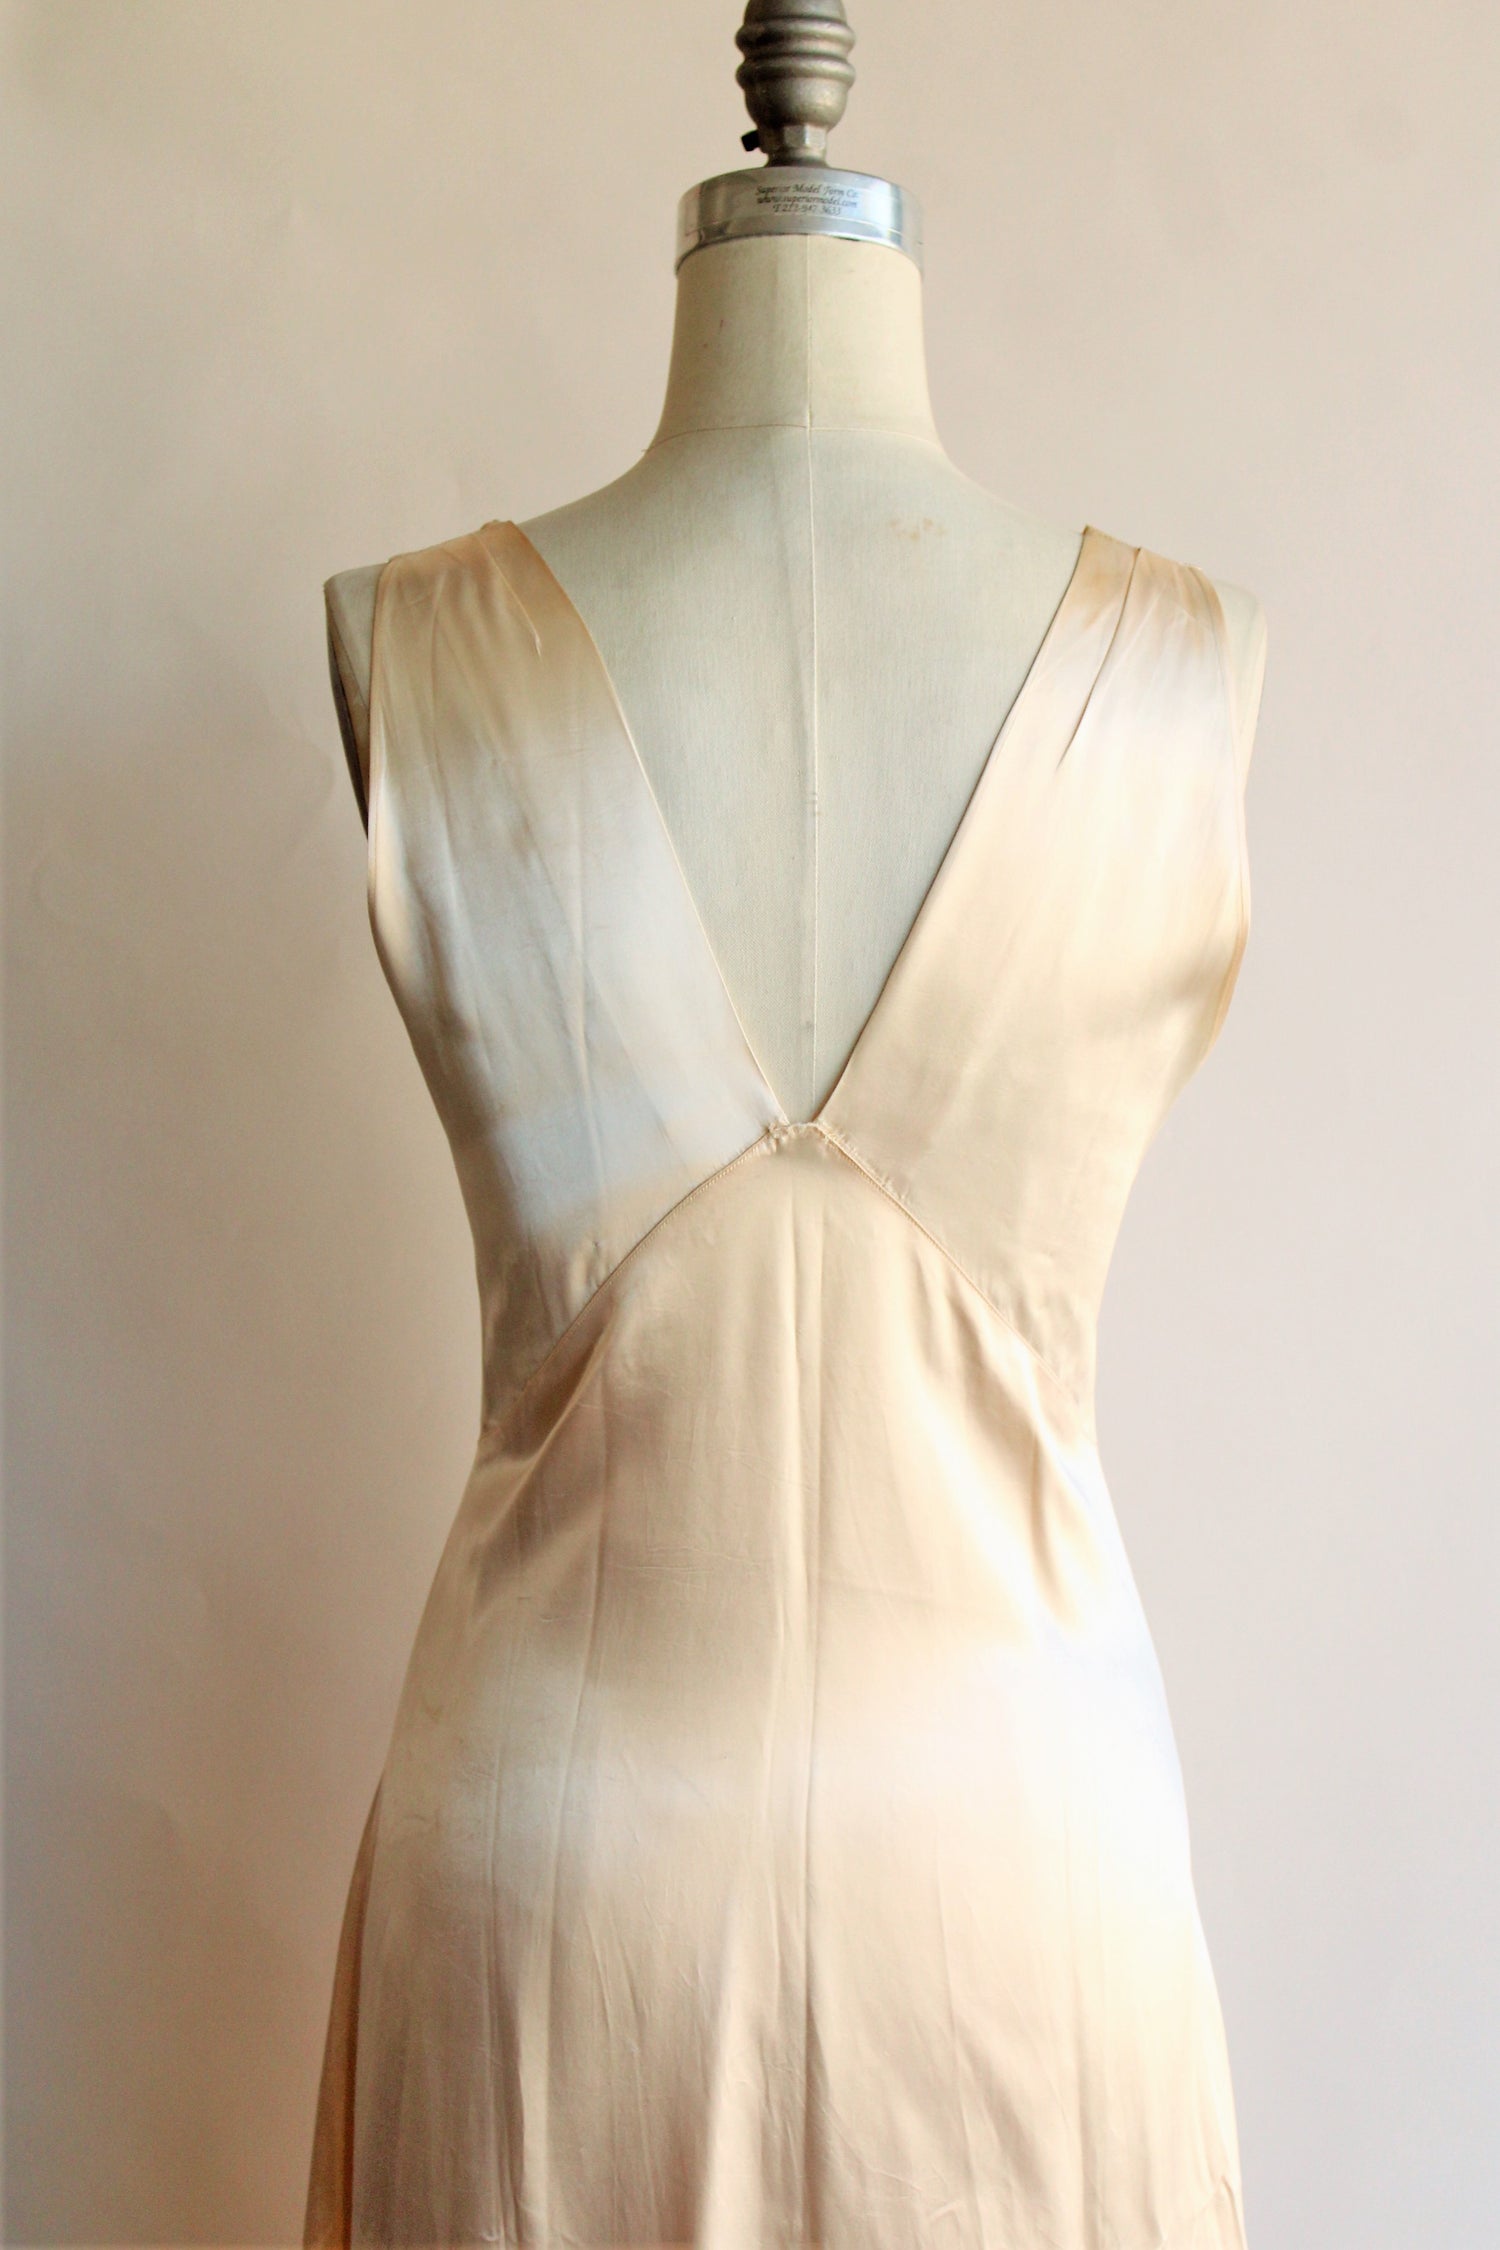 Vintage 1950s Peachy-Ivory Satin Nightgown